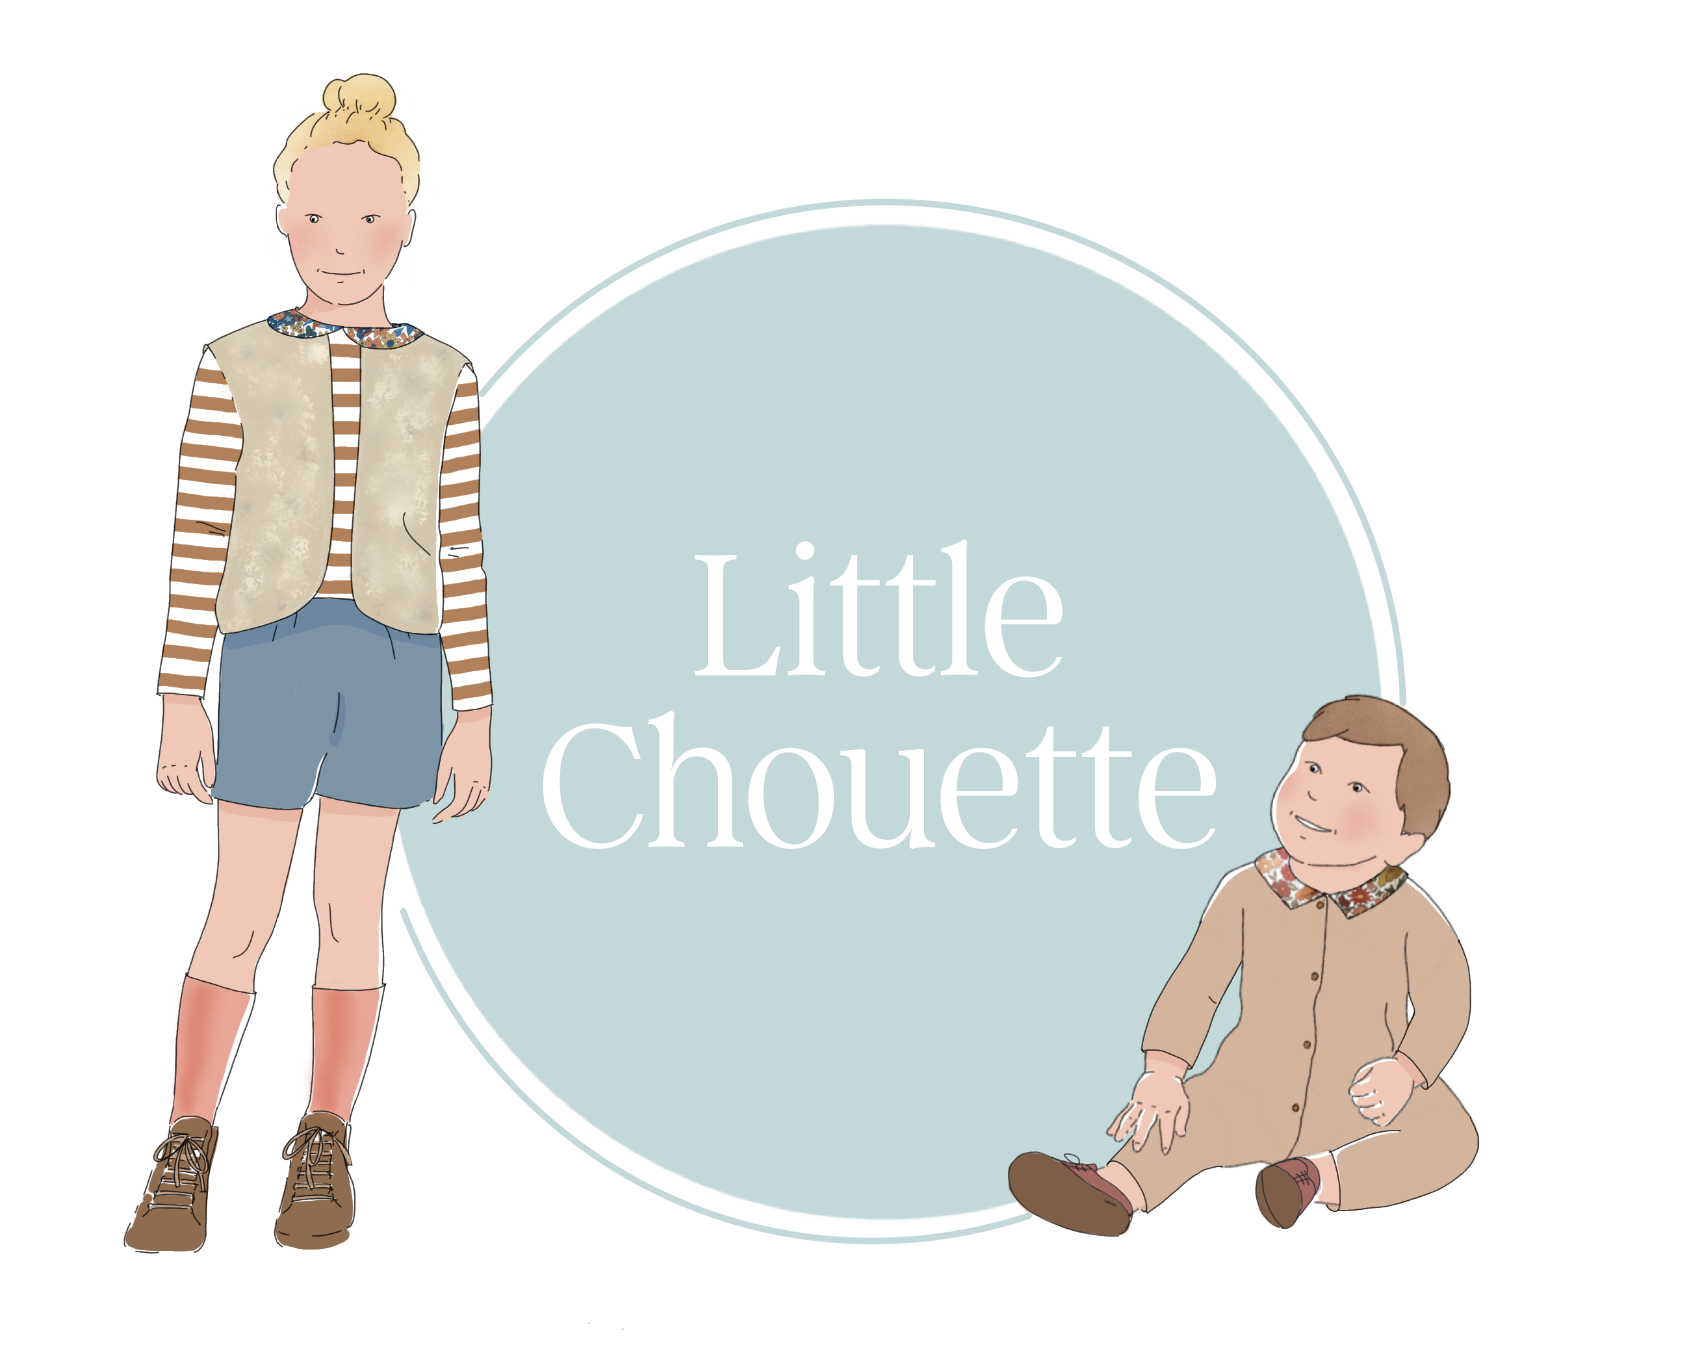 Little Chouette